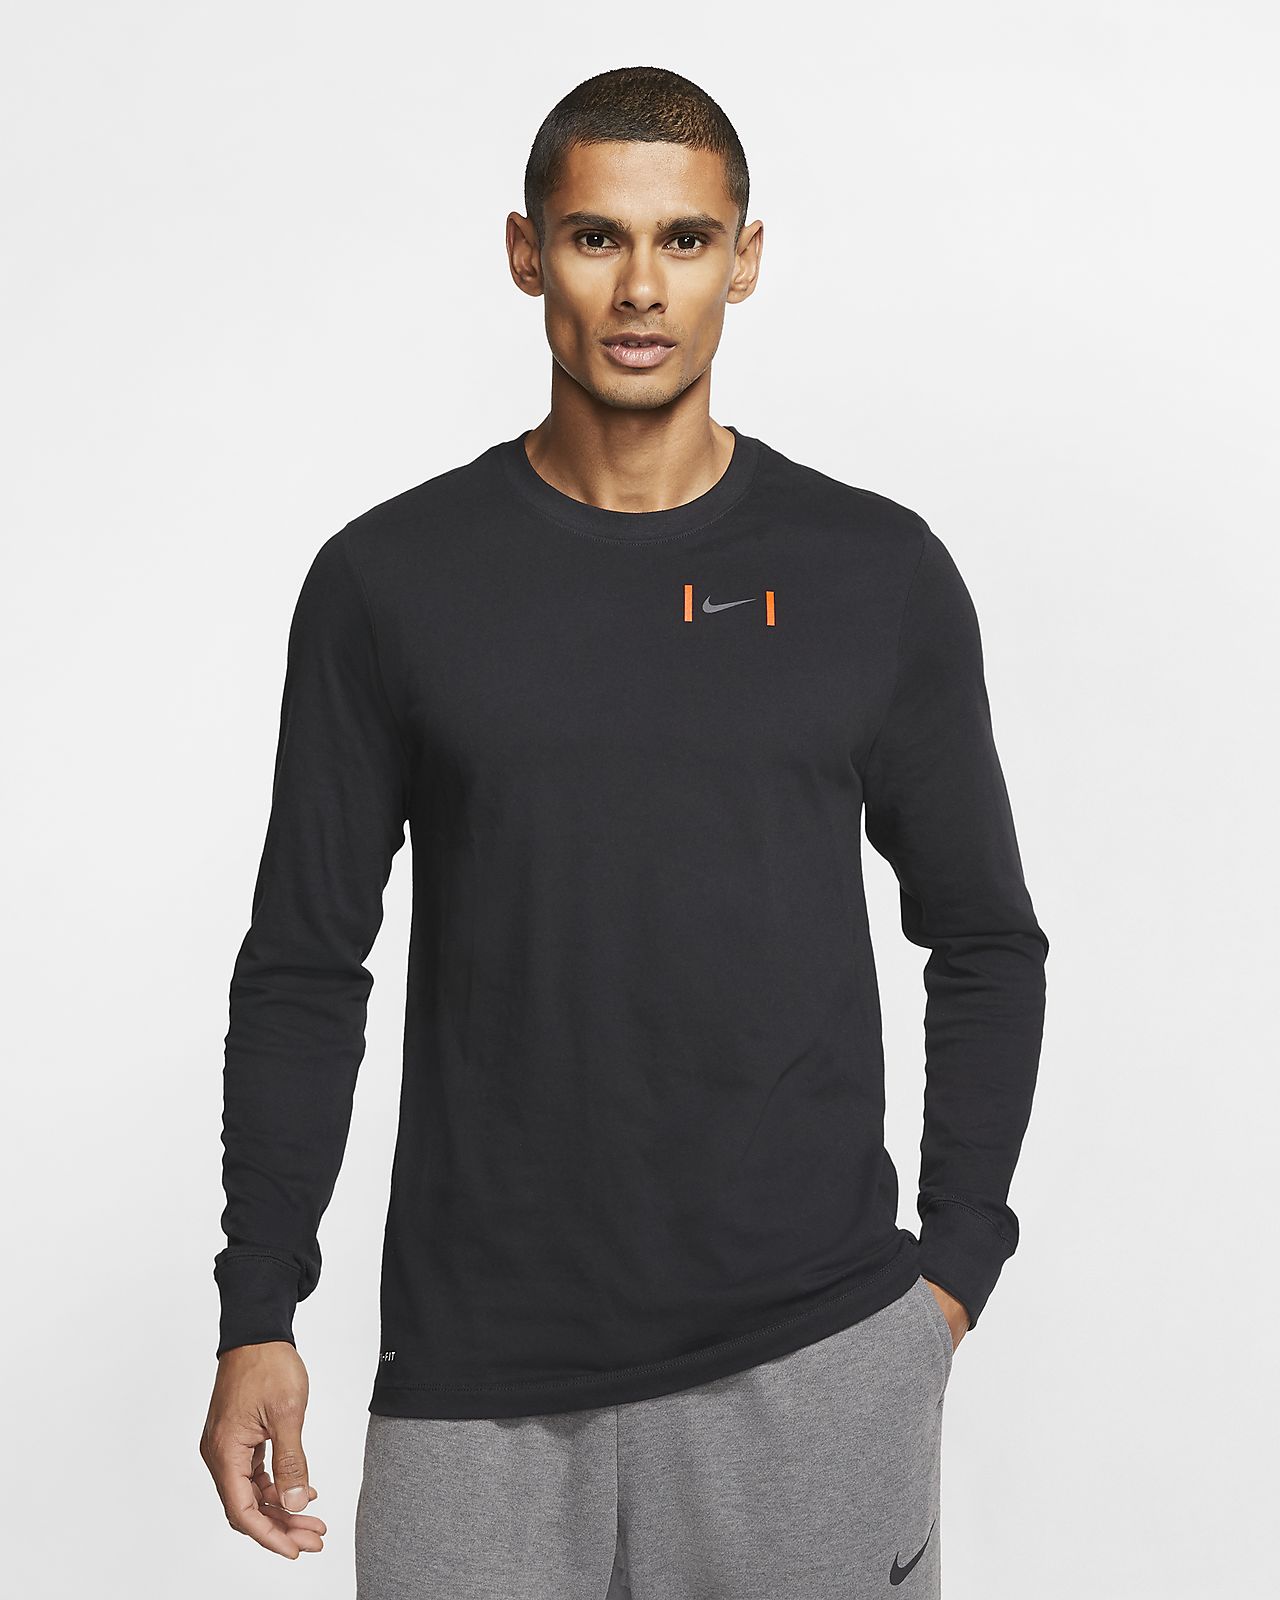 Download Nike Dri-FIT Men's Long-Sleeve Football T-Shirt. Nike.com